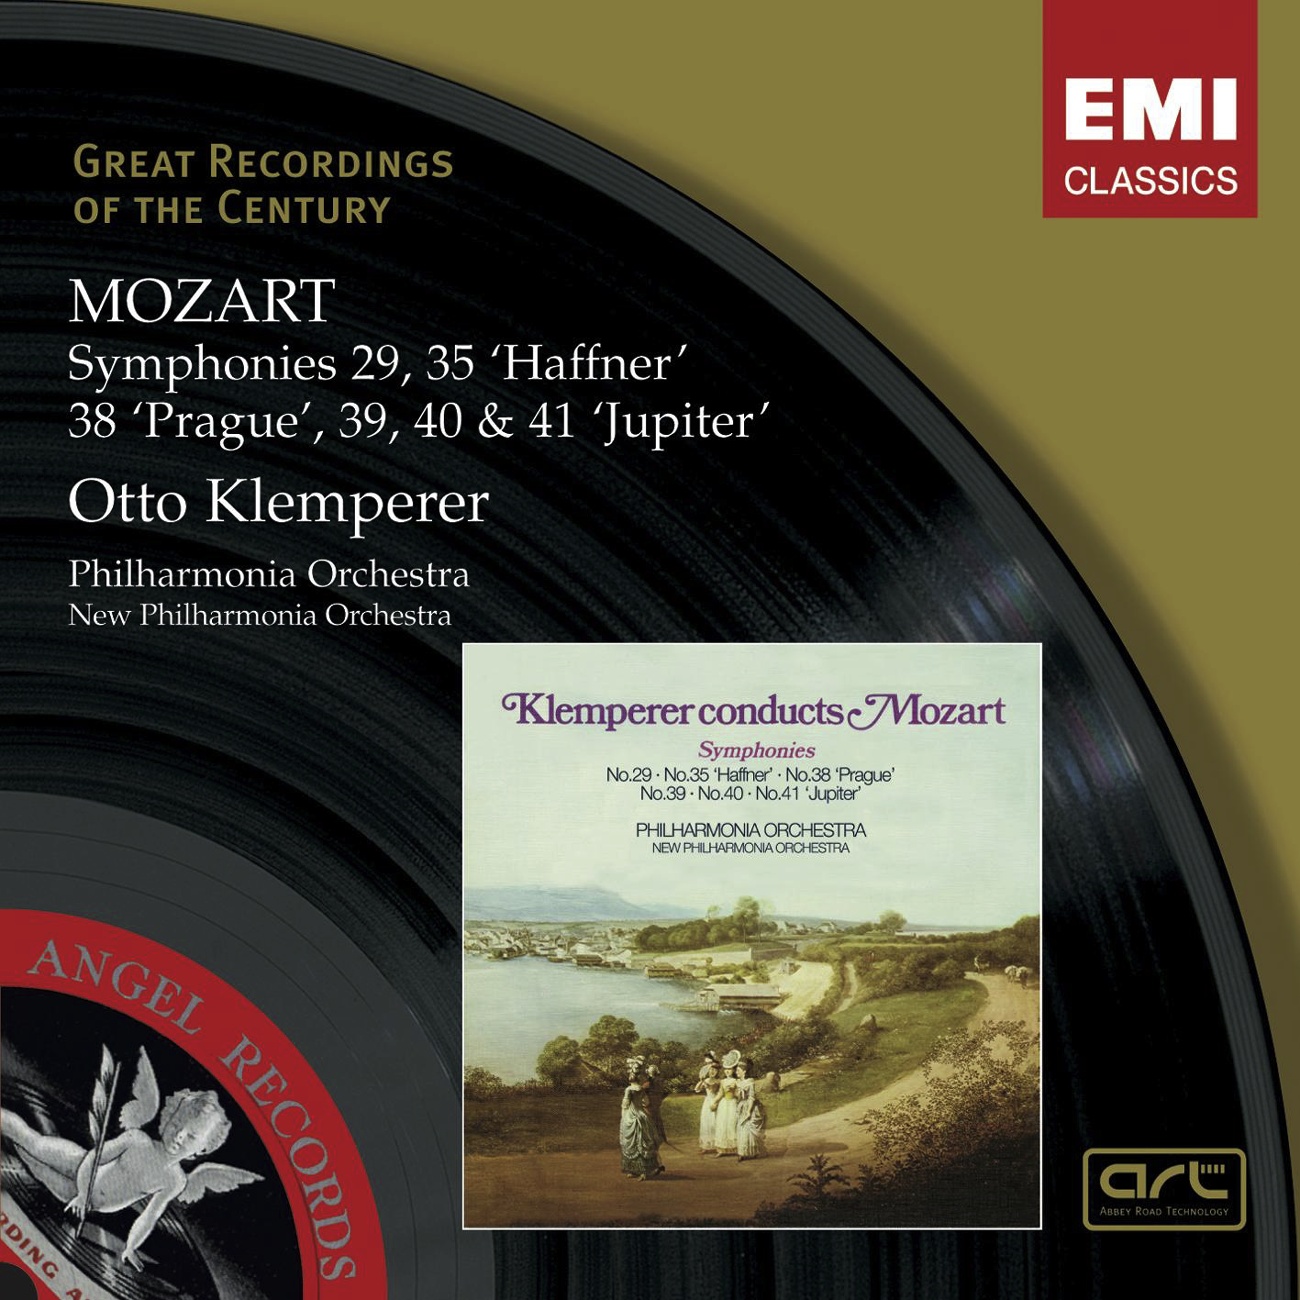 Symphony No. 29 in A K201/K186a (2000 Digital Remaster): Allegro moderato